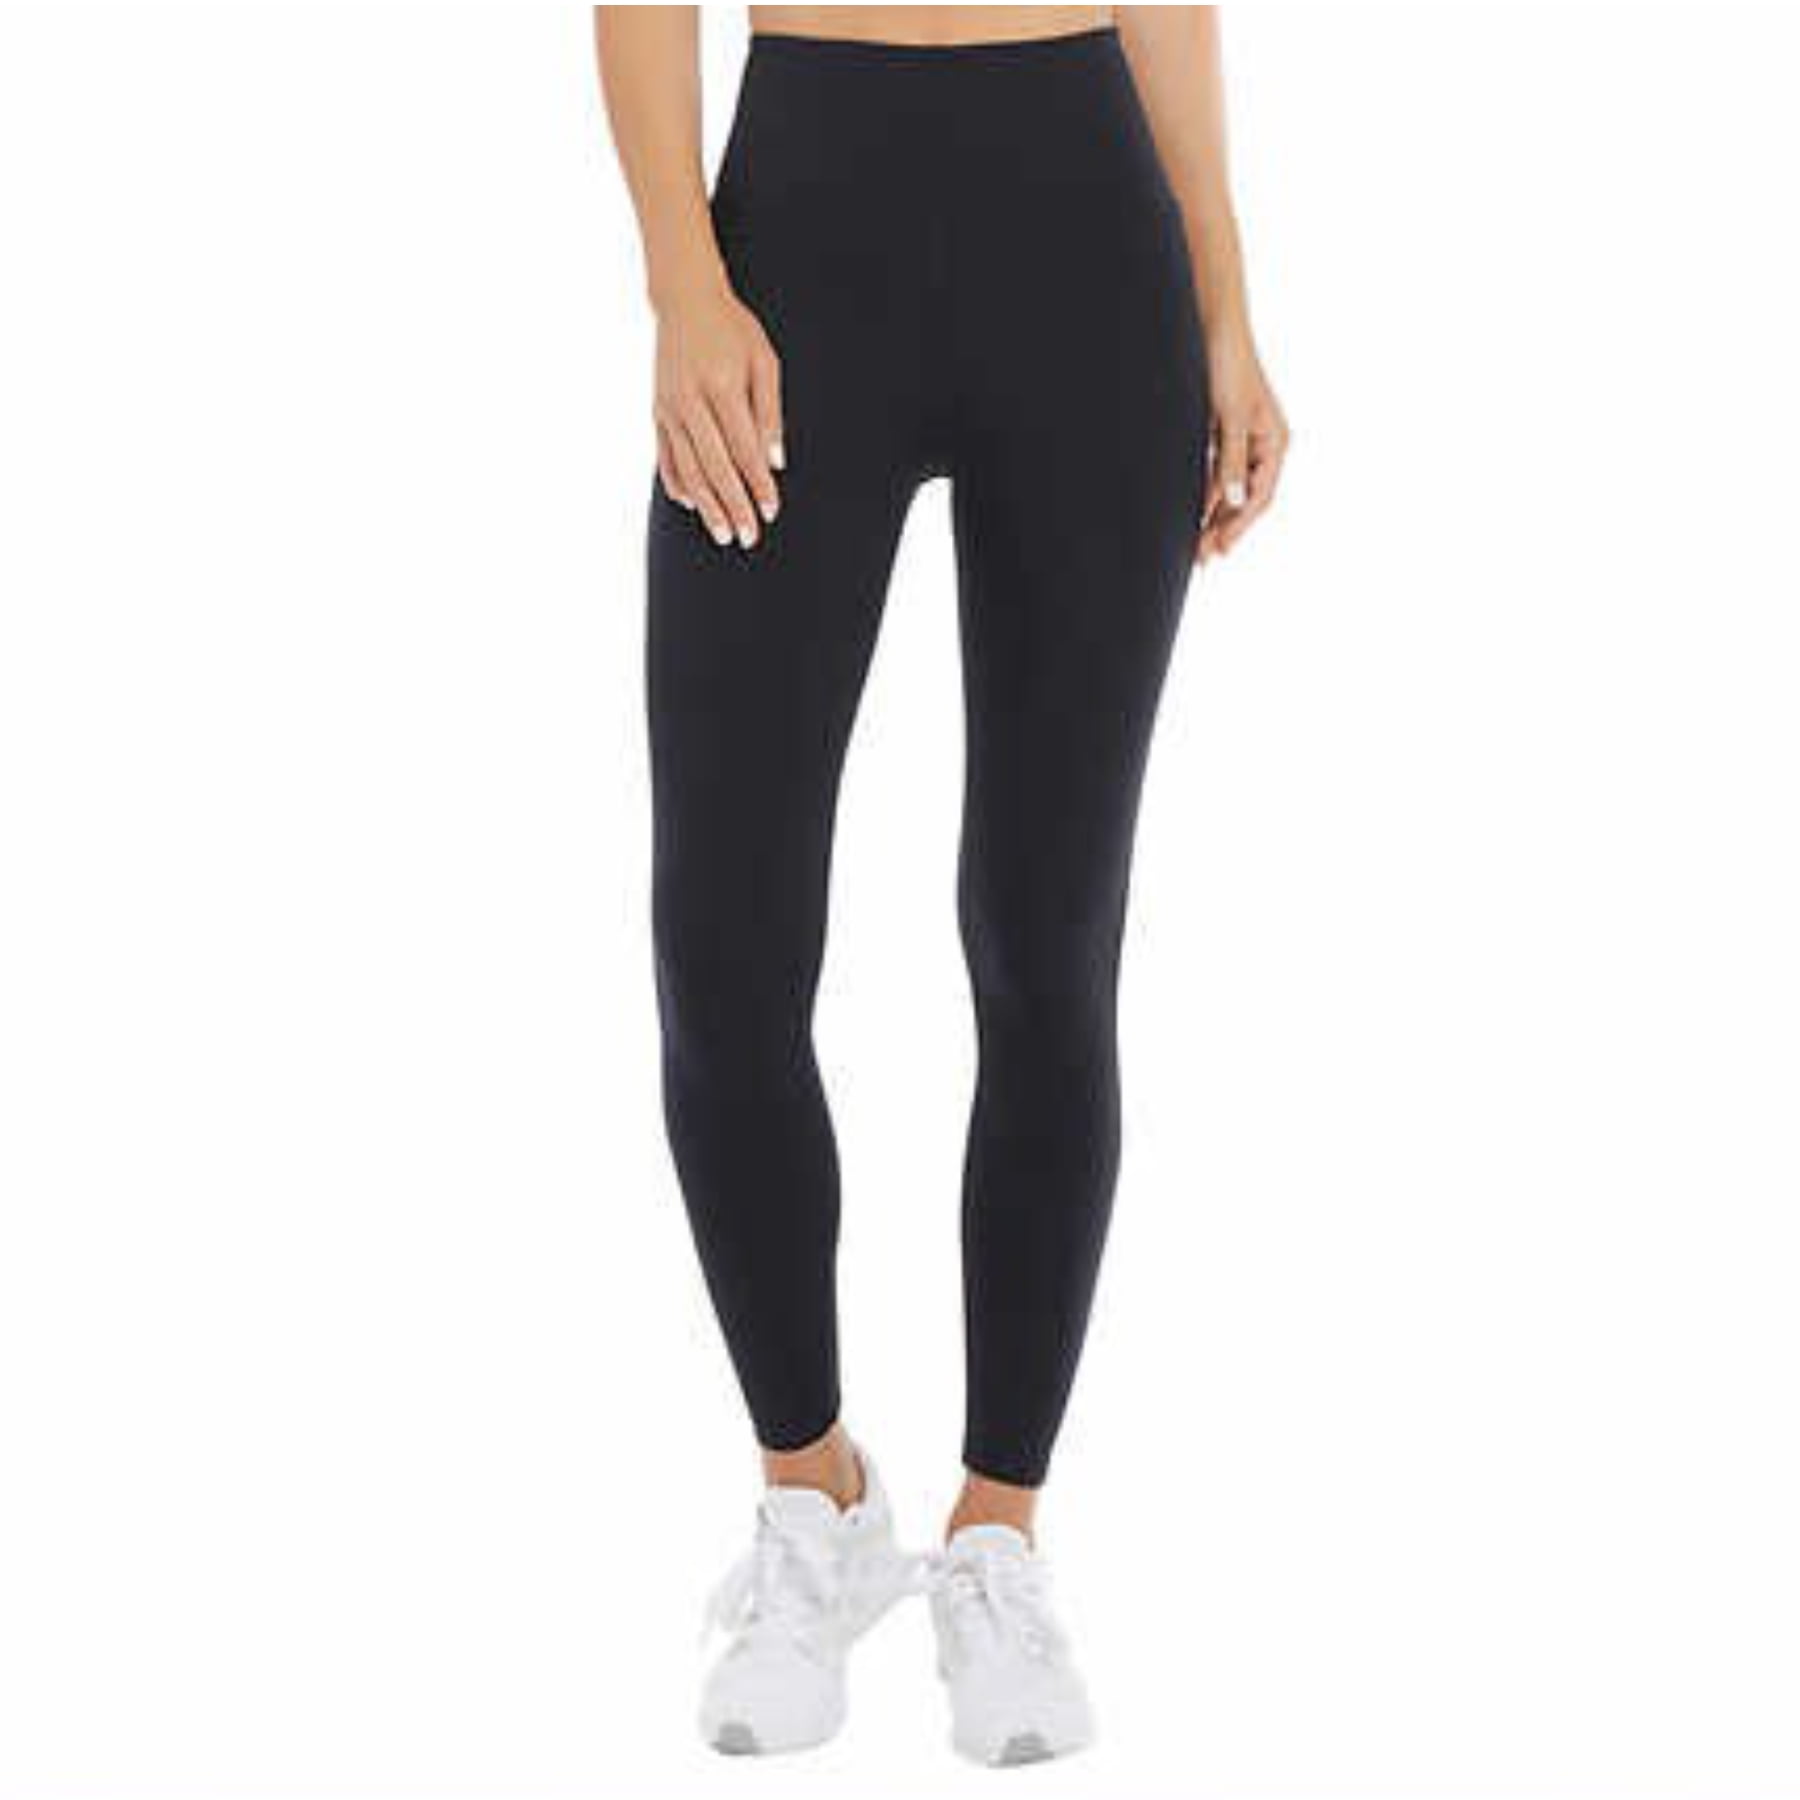 Avia Women's Black/Gray Activewear Stretch Performance Pocket Capri Pants  8-10 M